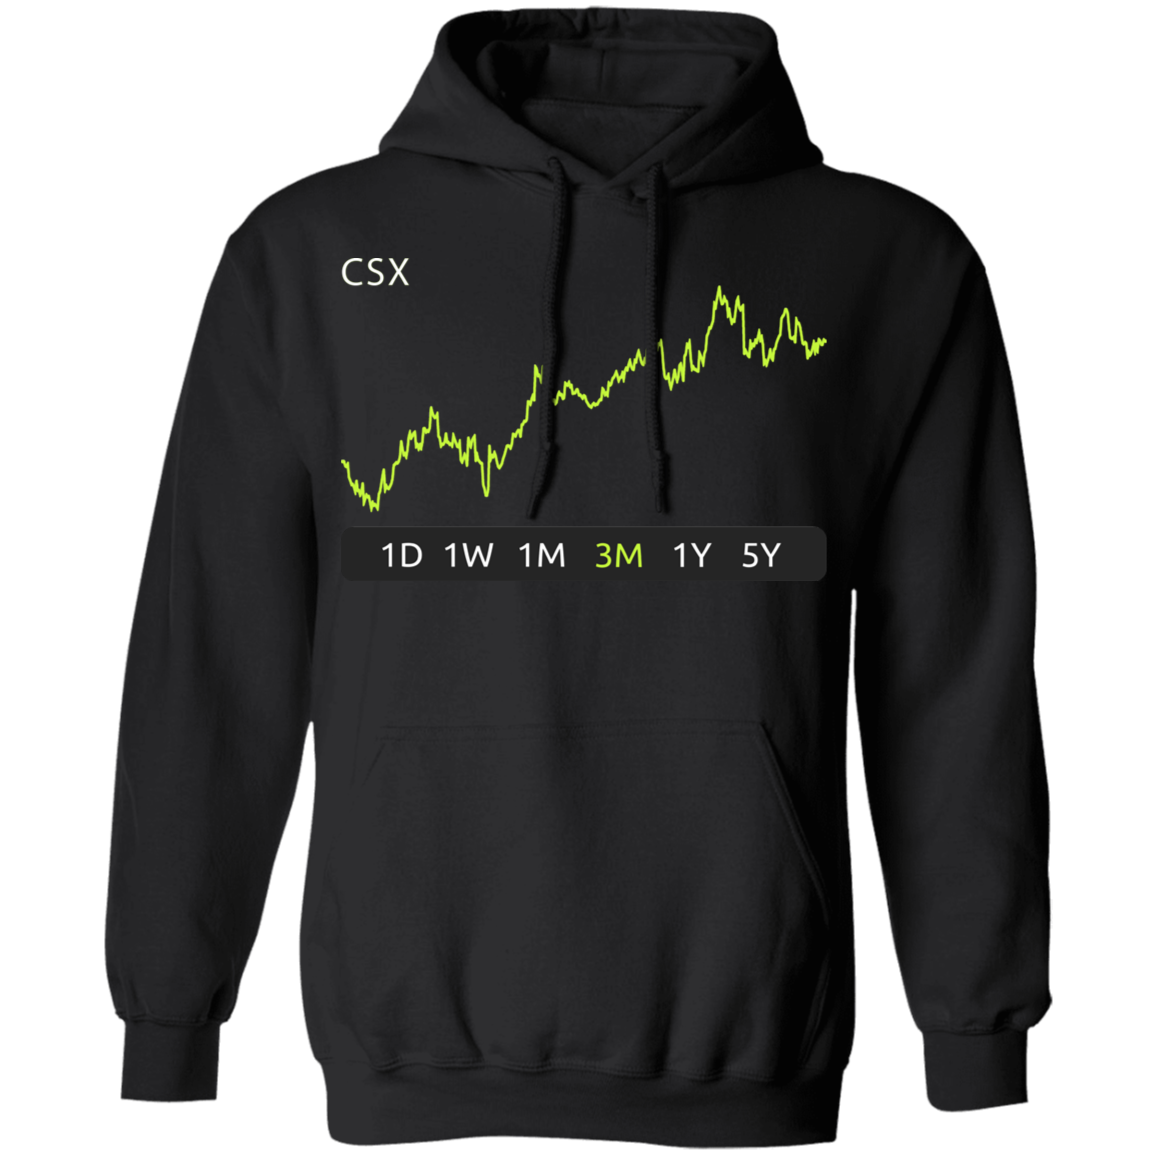 CSX Stock 3m Pullover Hoodie